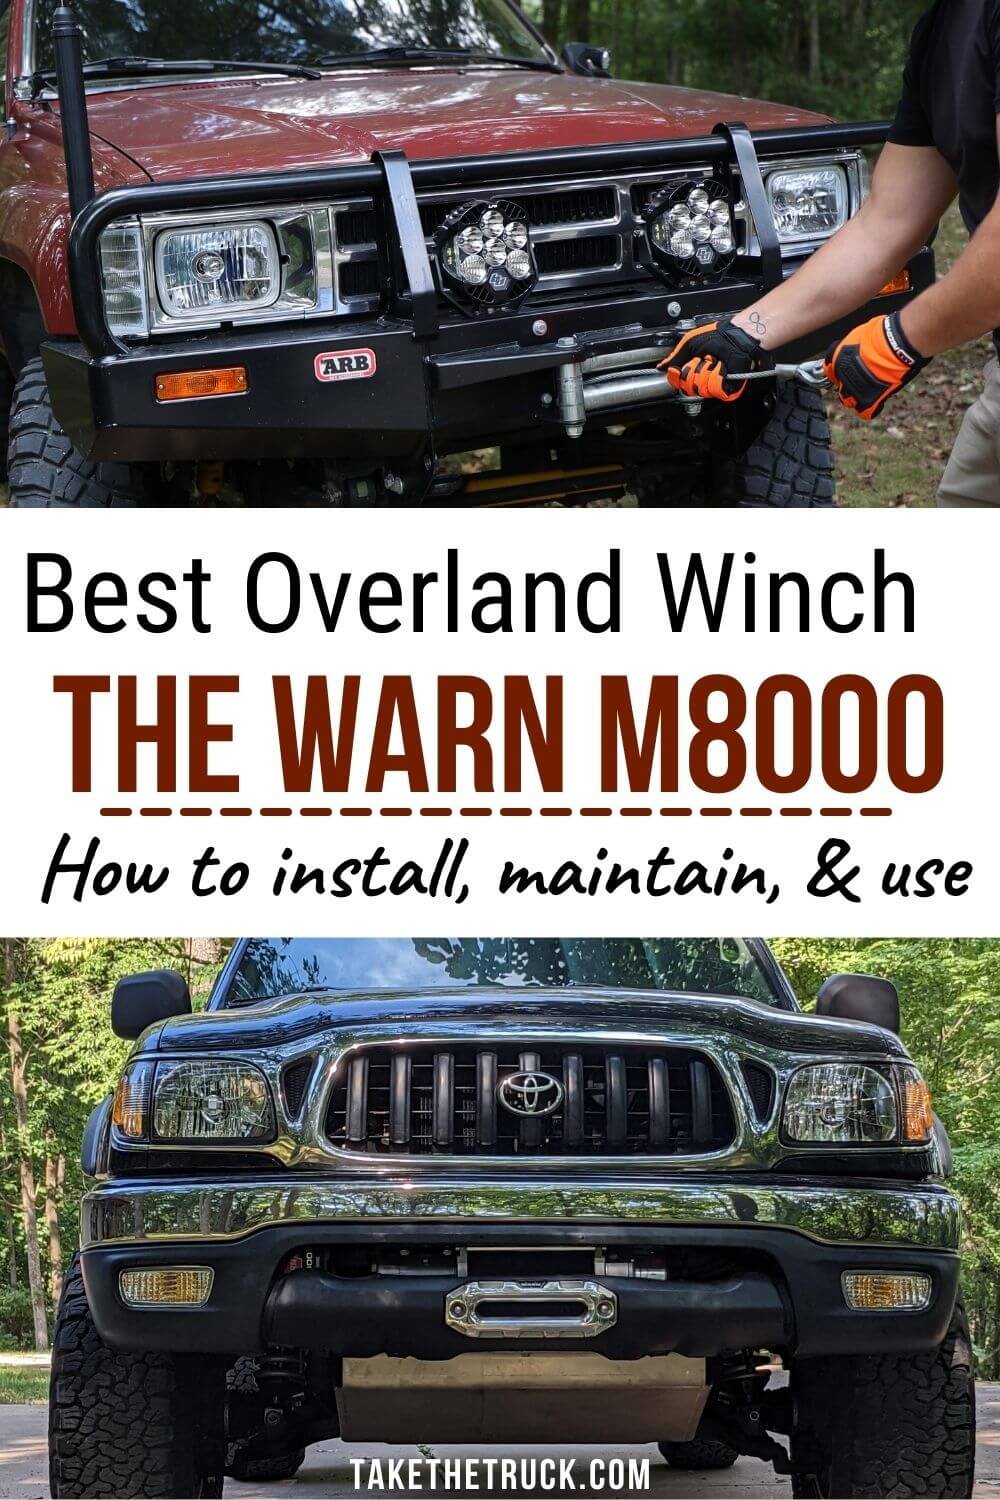  4x4 winch | warn winch | warn M8000 | warn winch wire diagram | warn winch jeep | warn winch accessories | warn winch mount | toyota winch | off road winch | winch offroad |